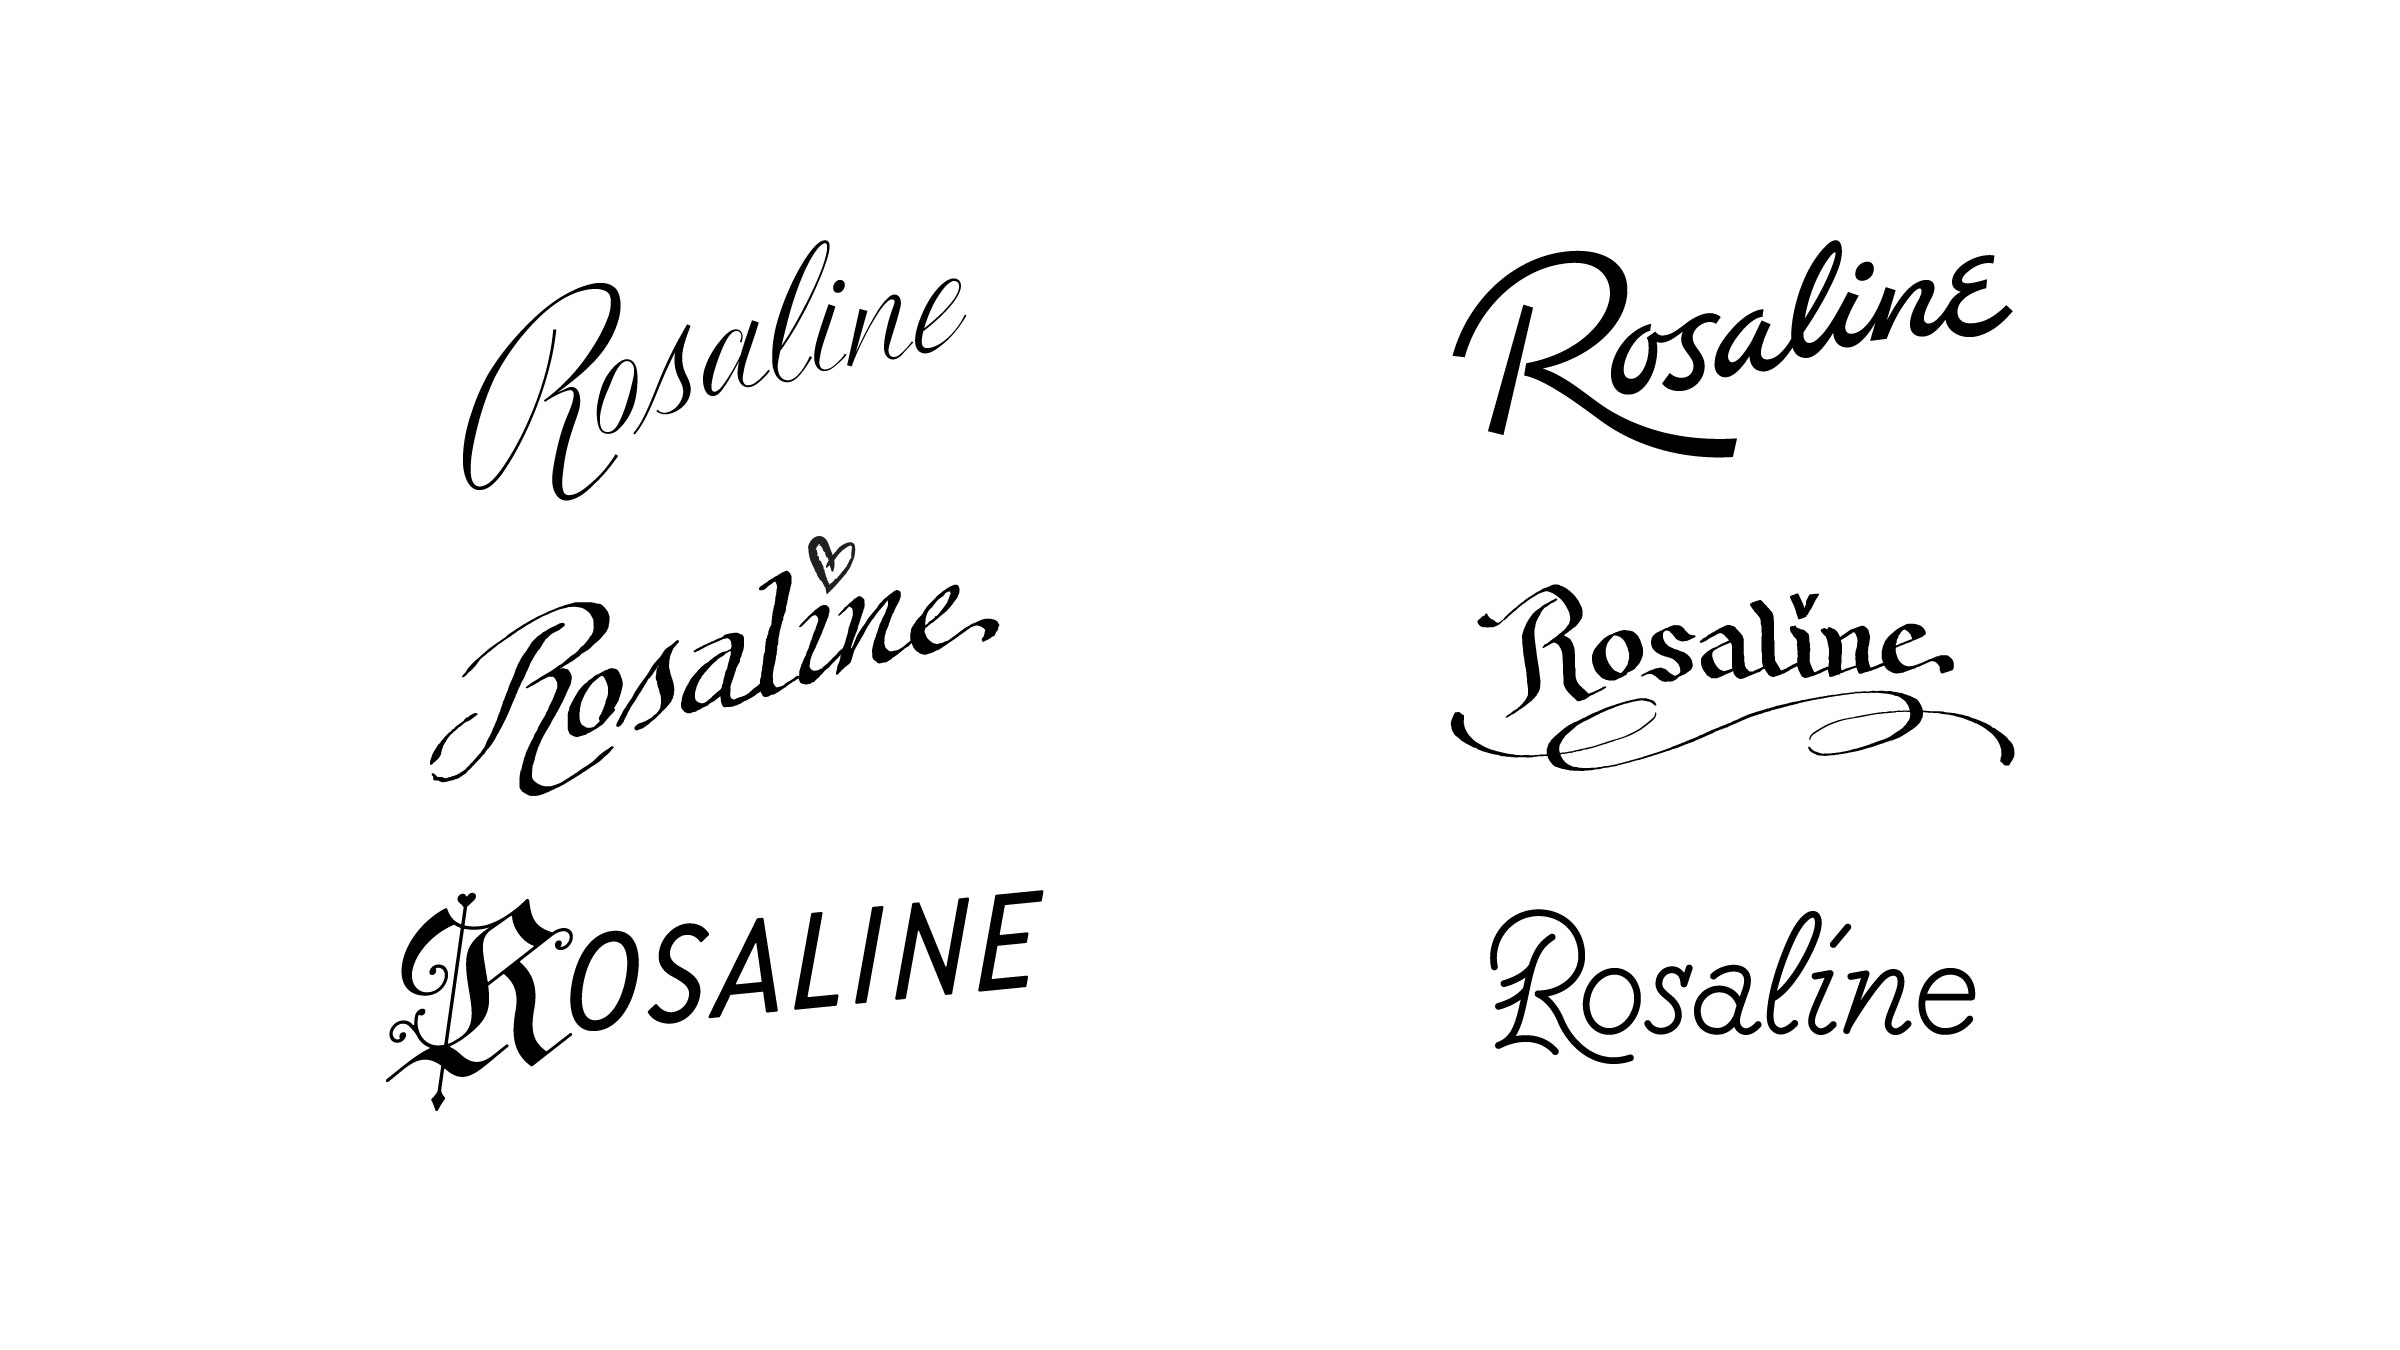 Rosaline title treatment fonts by Hoodzpah